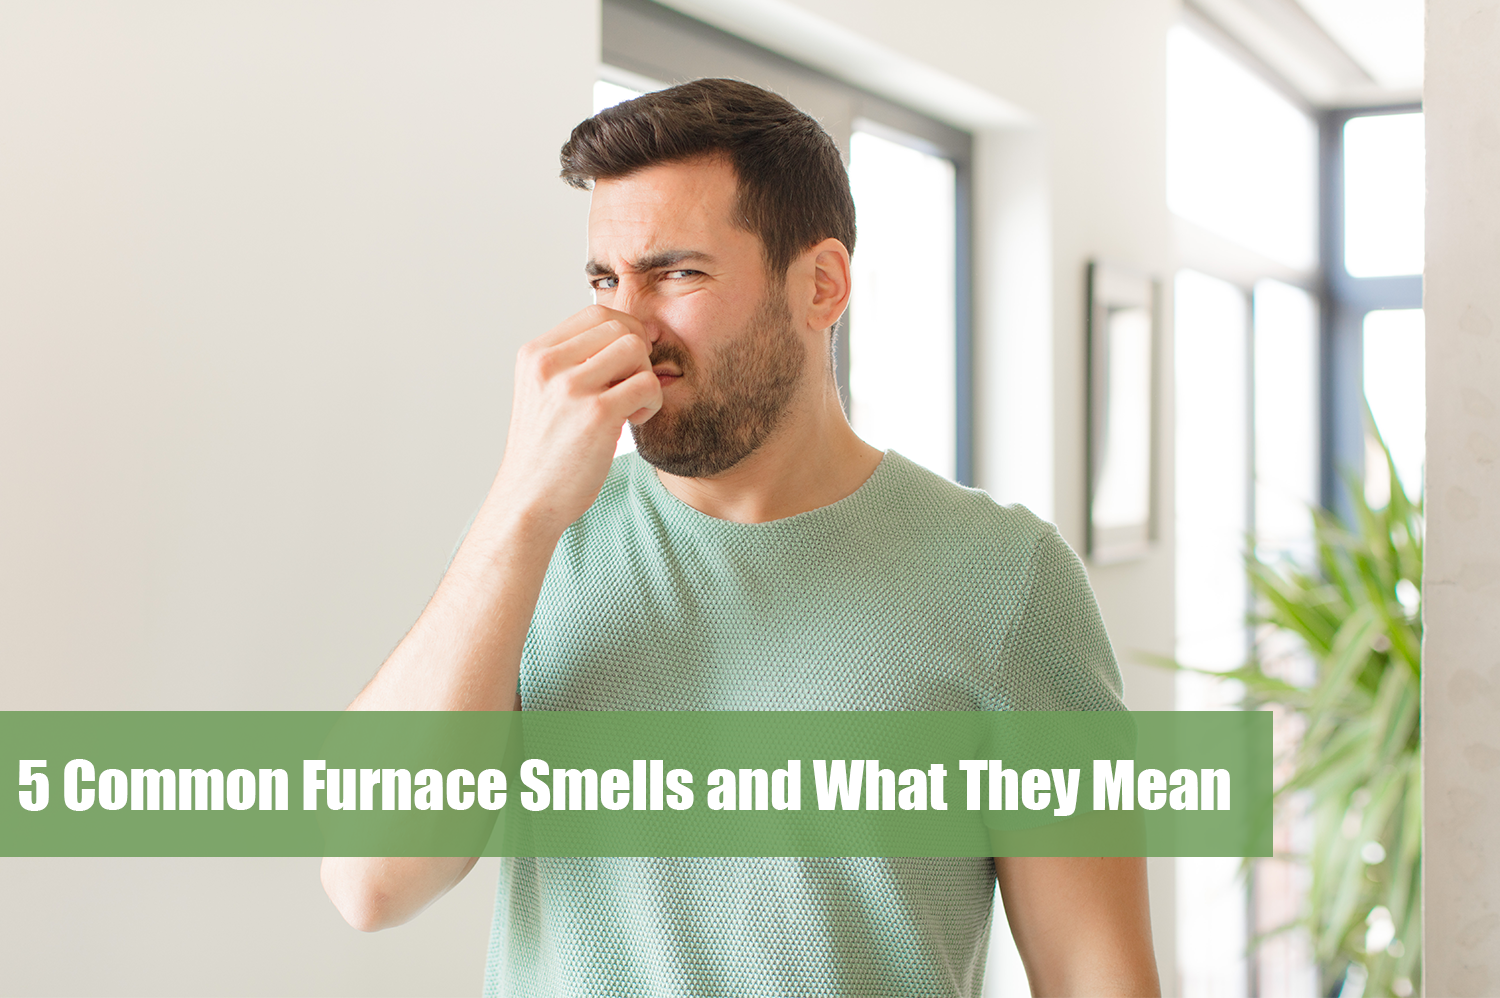 White man in green shirt pinching his nose because of furnace smells.